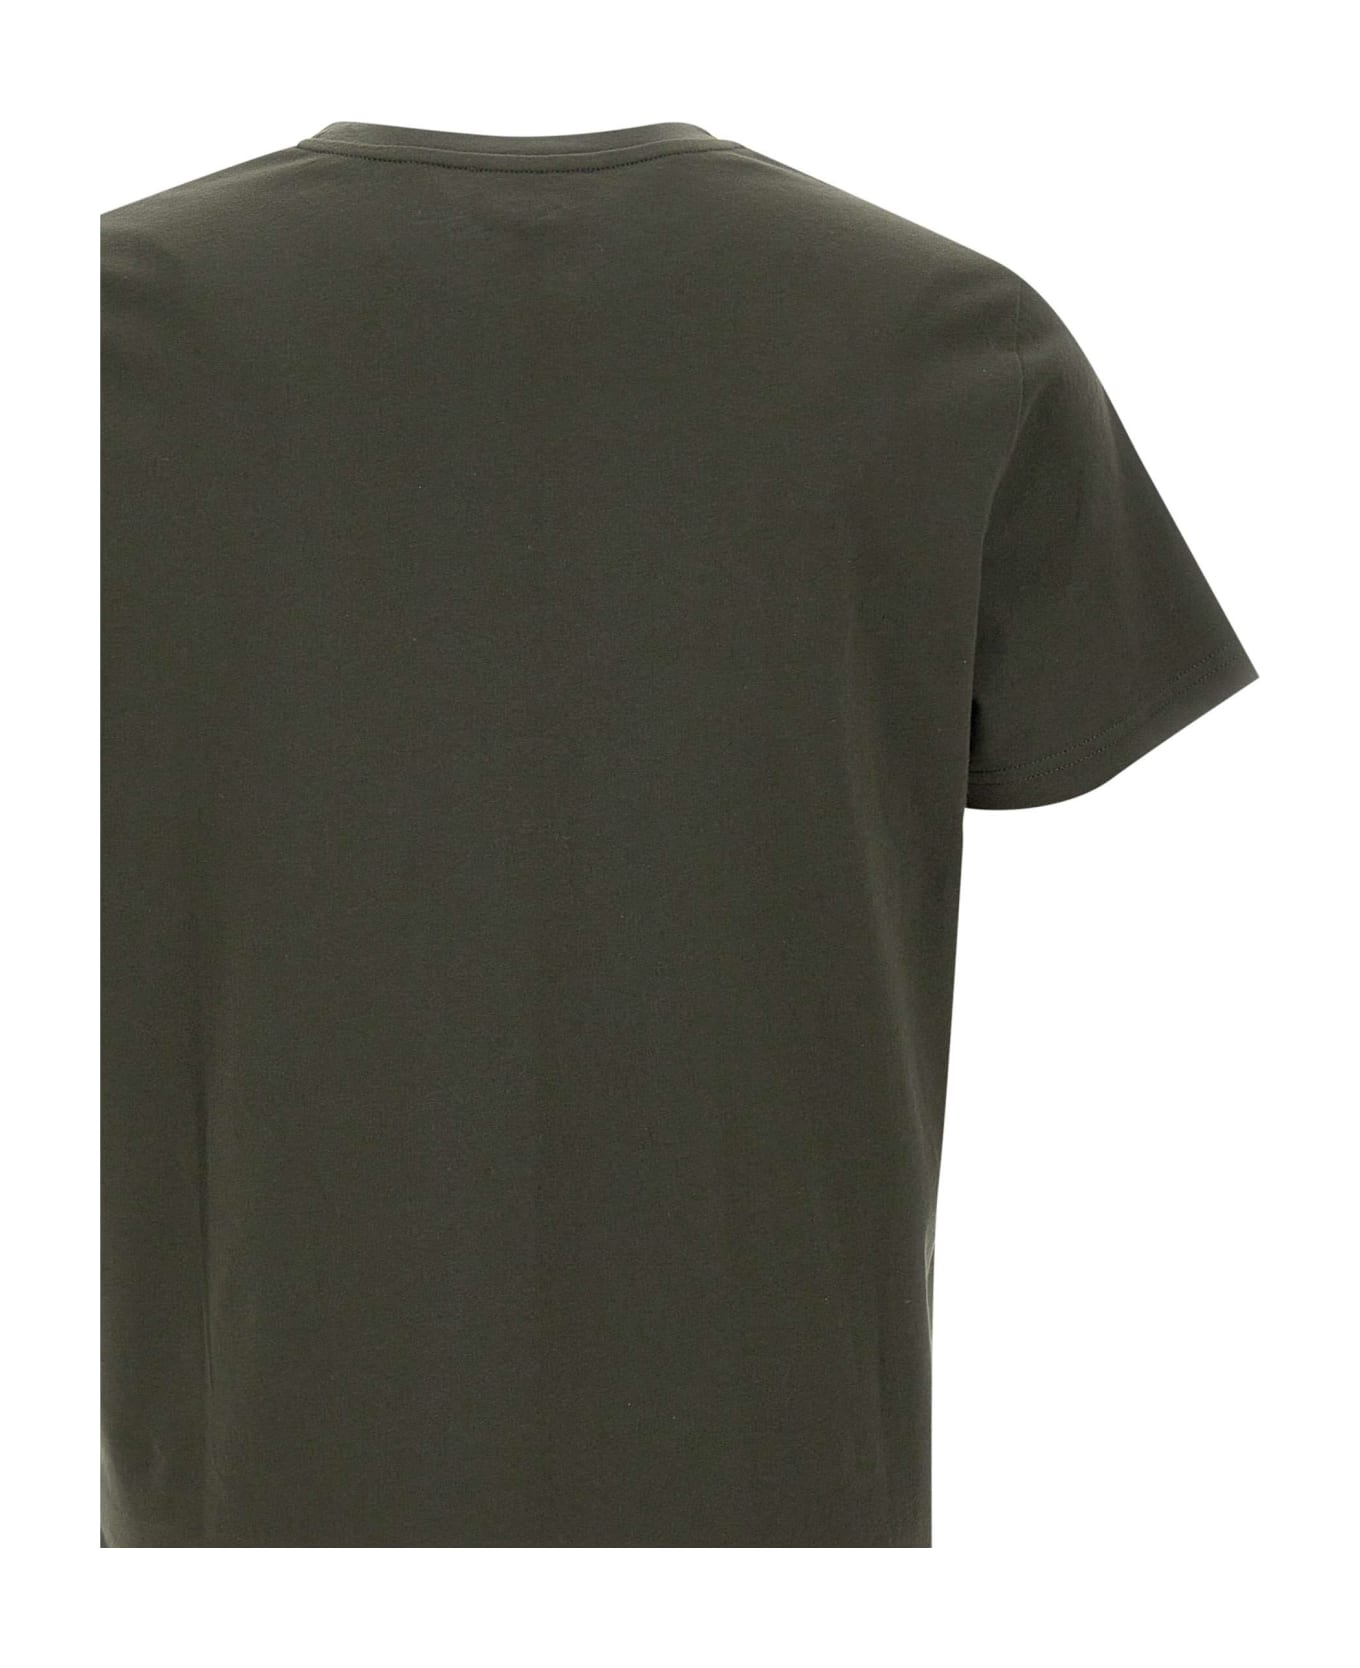 A.P.C. 'item' Cotton T-shirt - GREEN